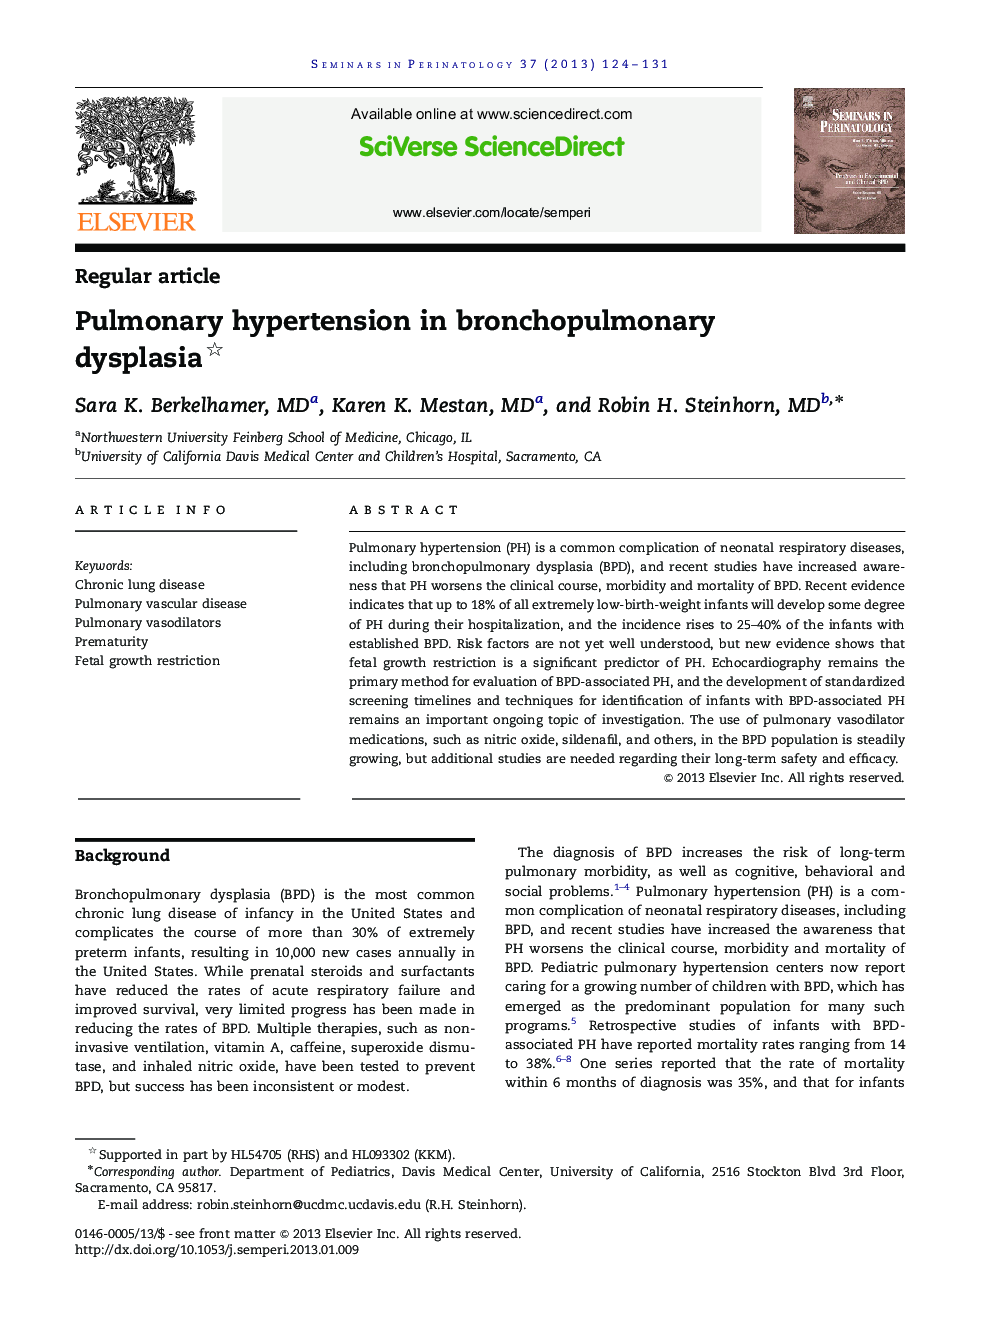 Pulmonary hypertension in bronchopulmonary dysplasia 